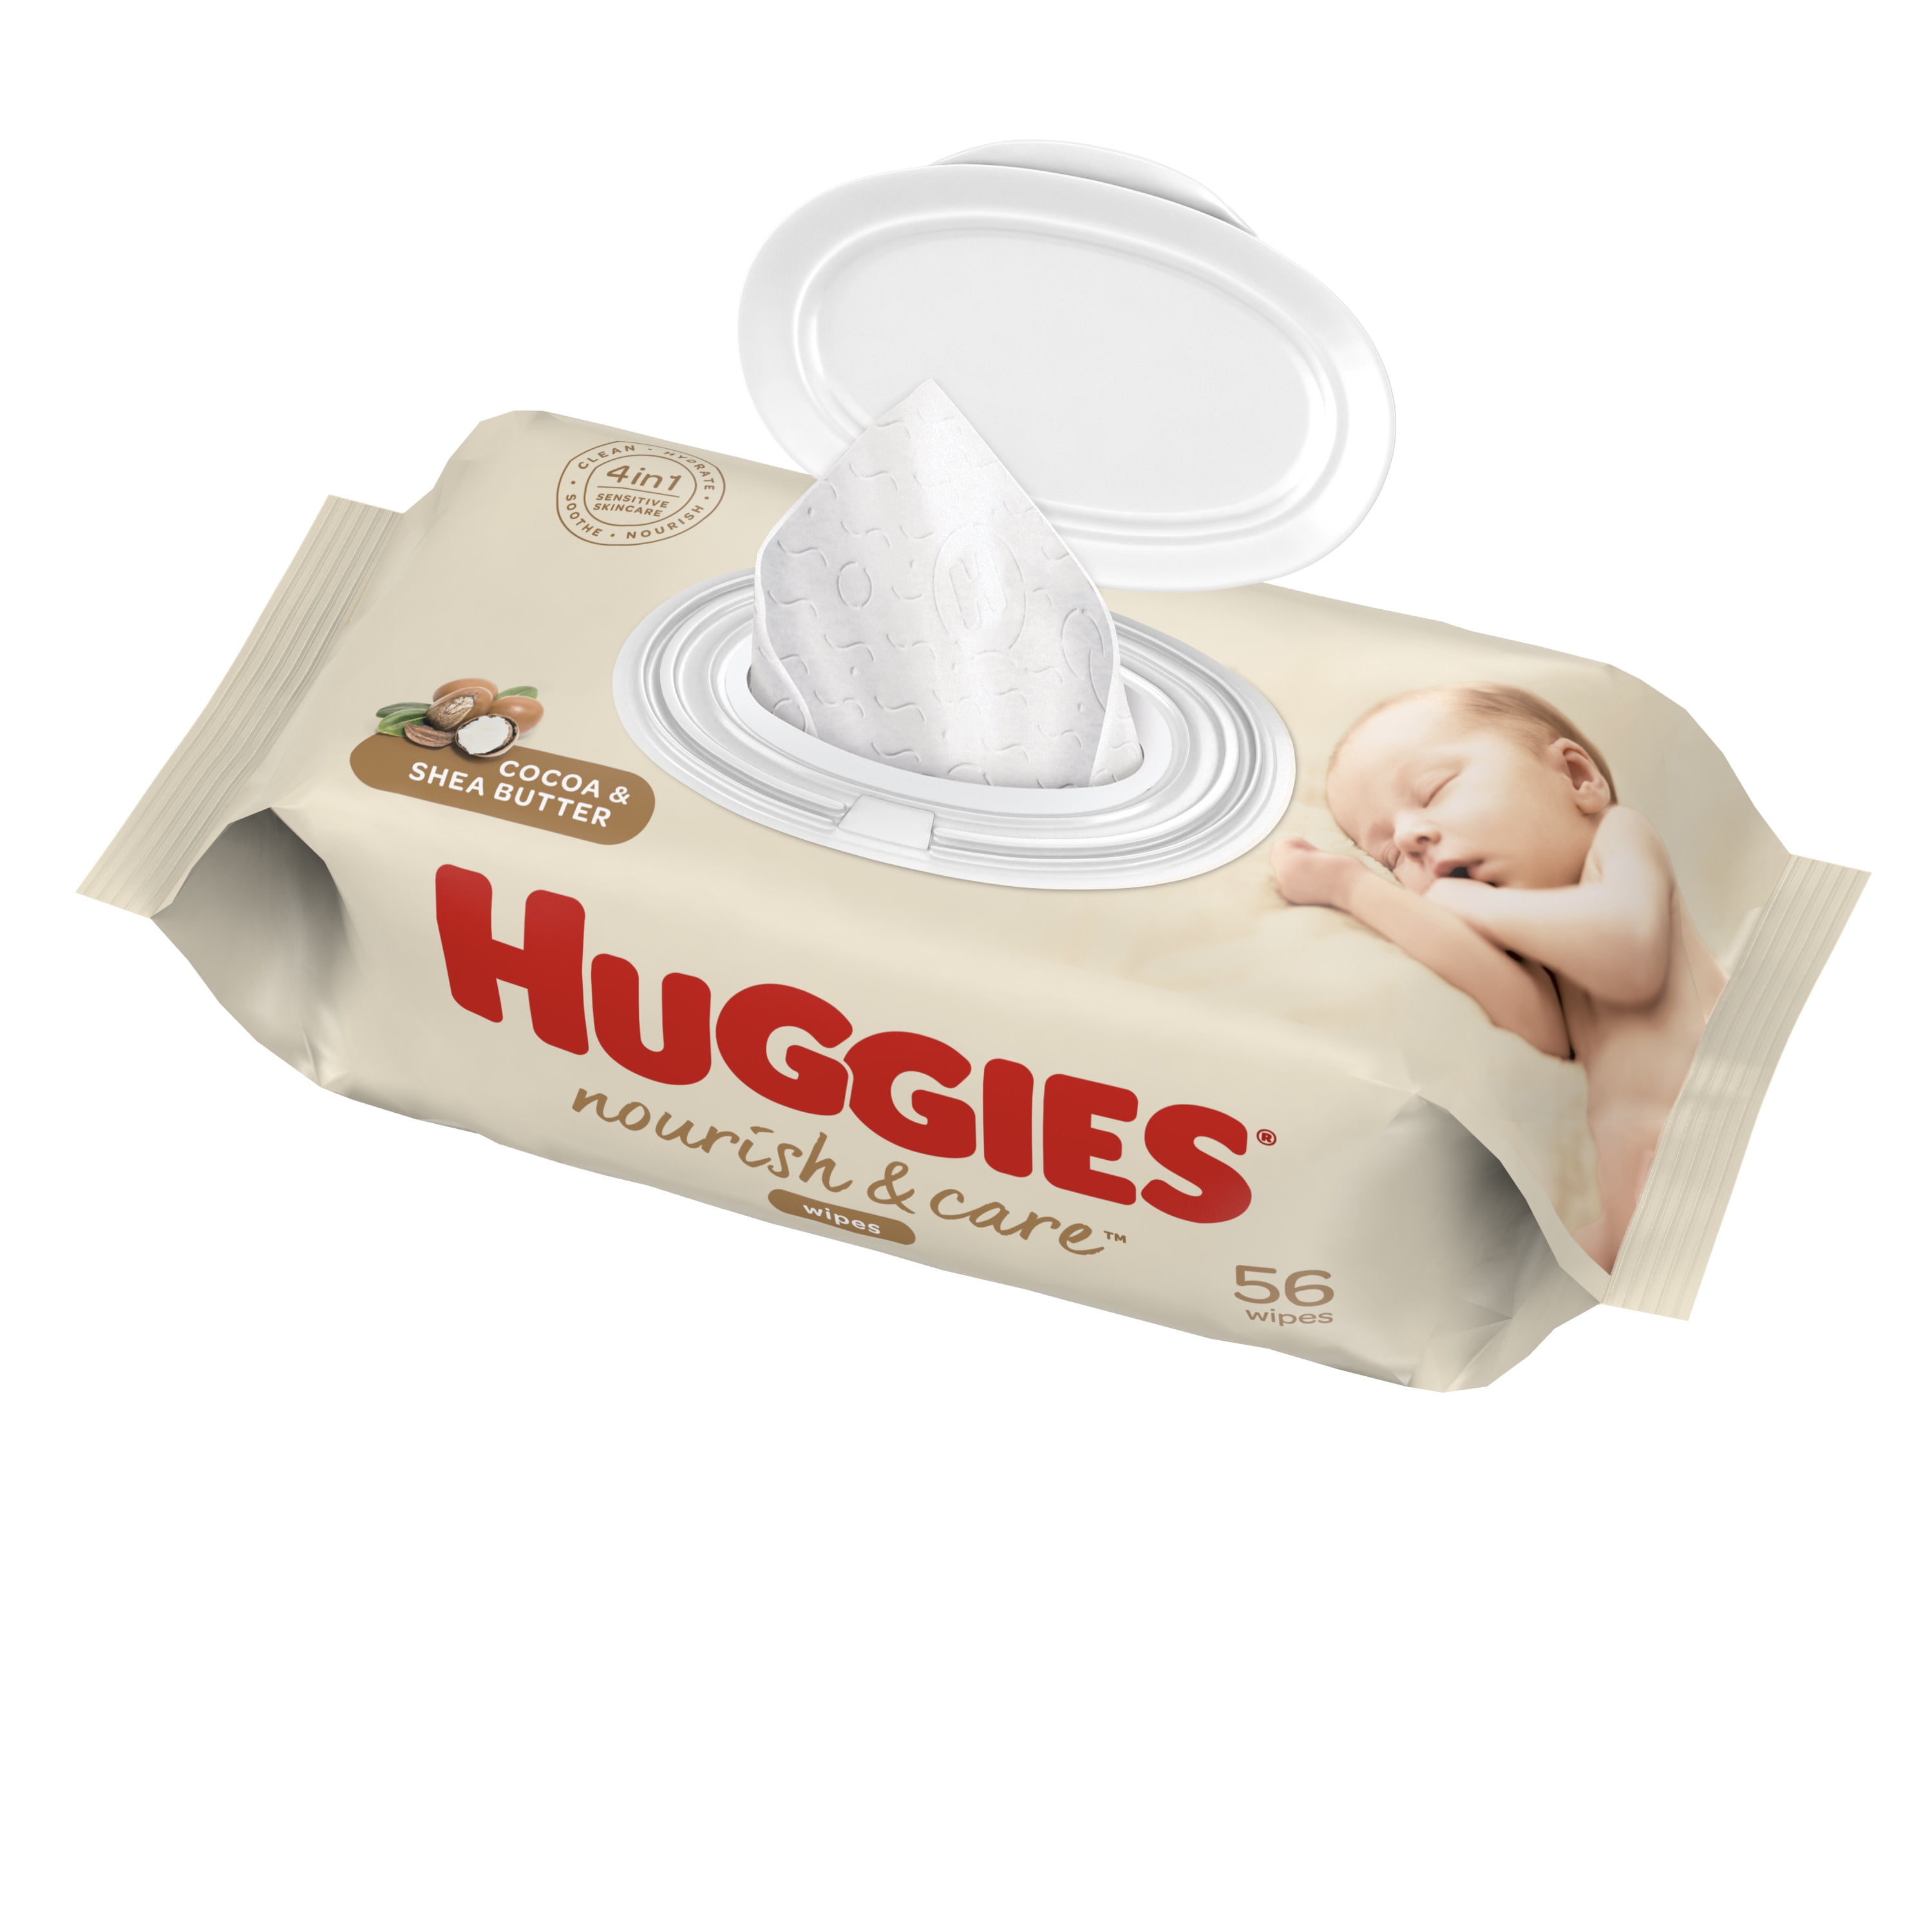 huggies nourish and care wipes